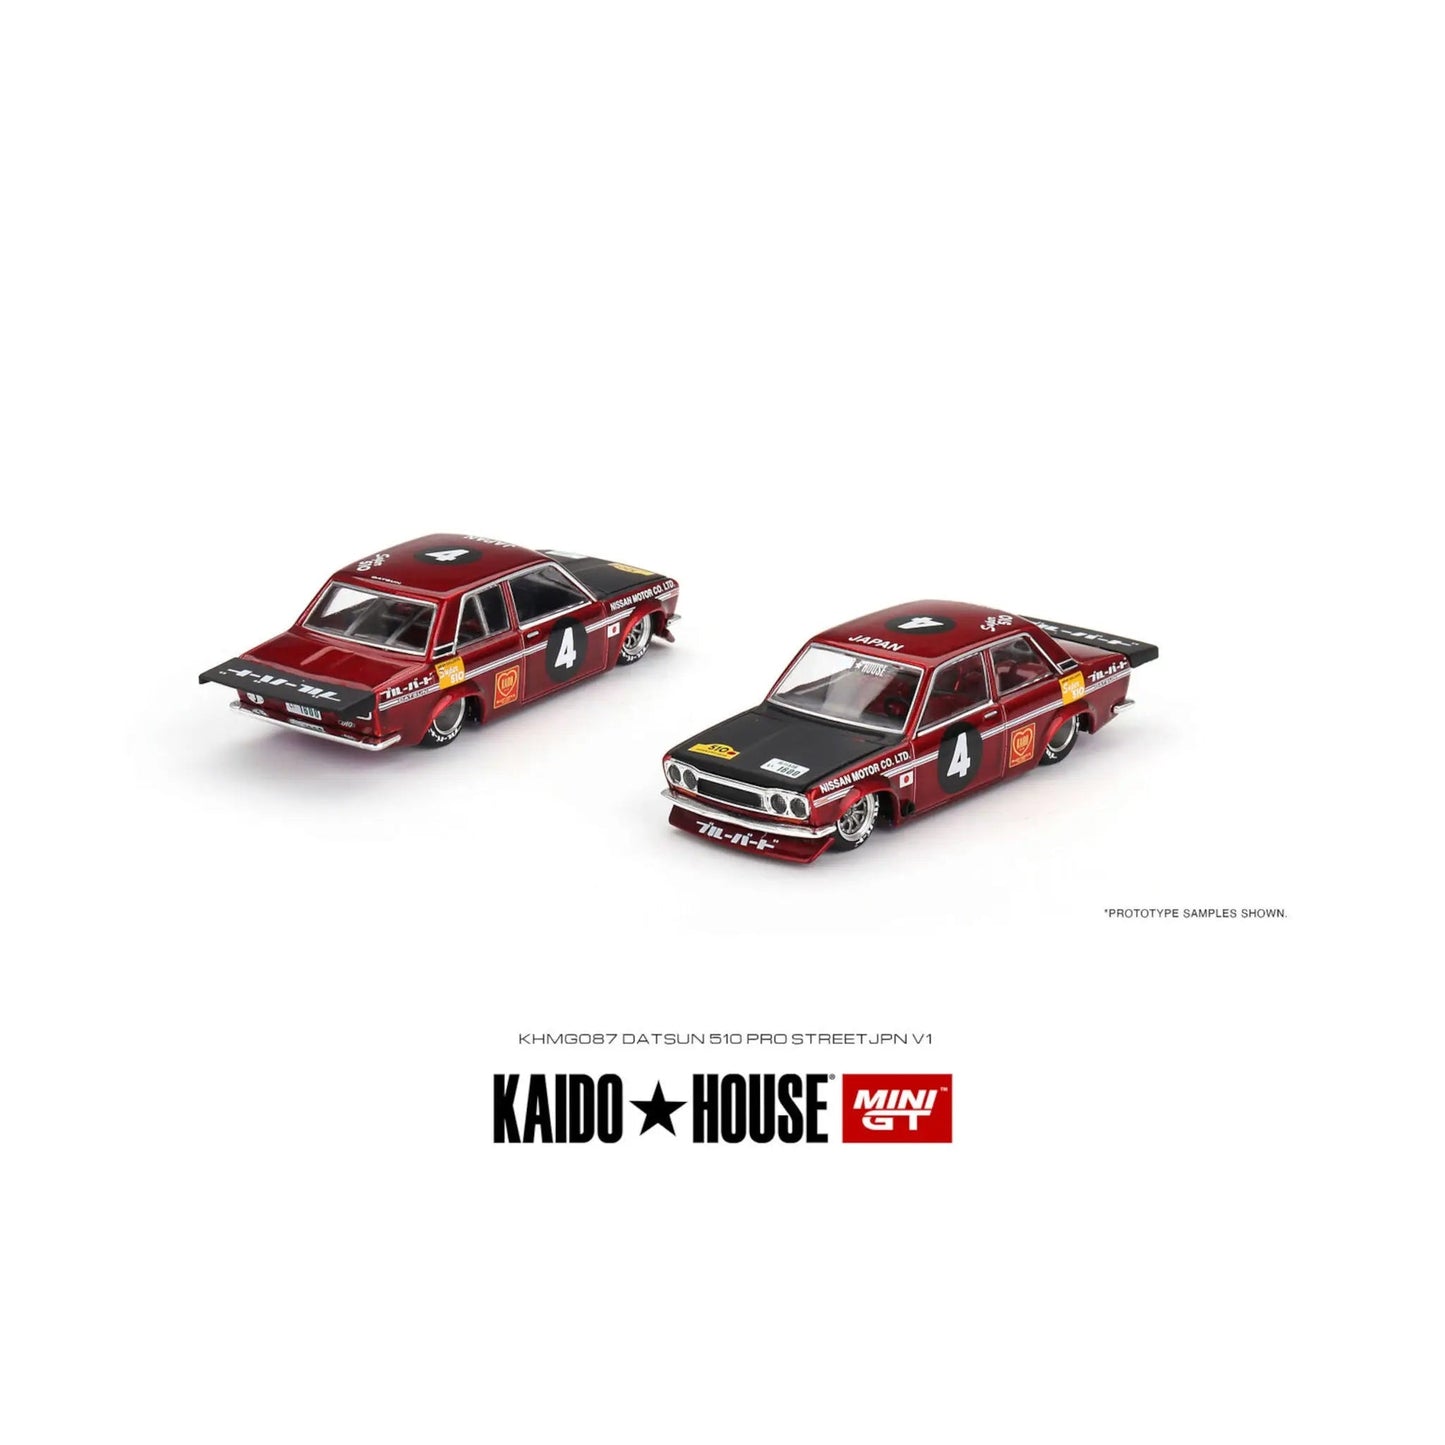 Kaido House Datsun 510 Pro Street JPN V1 Mini GT 1/64 - MGTKHMG087